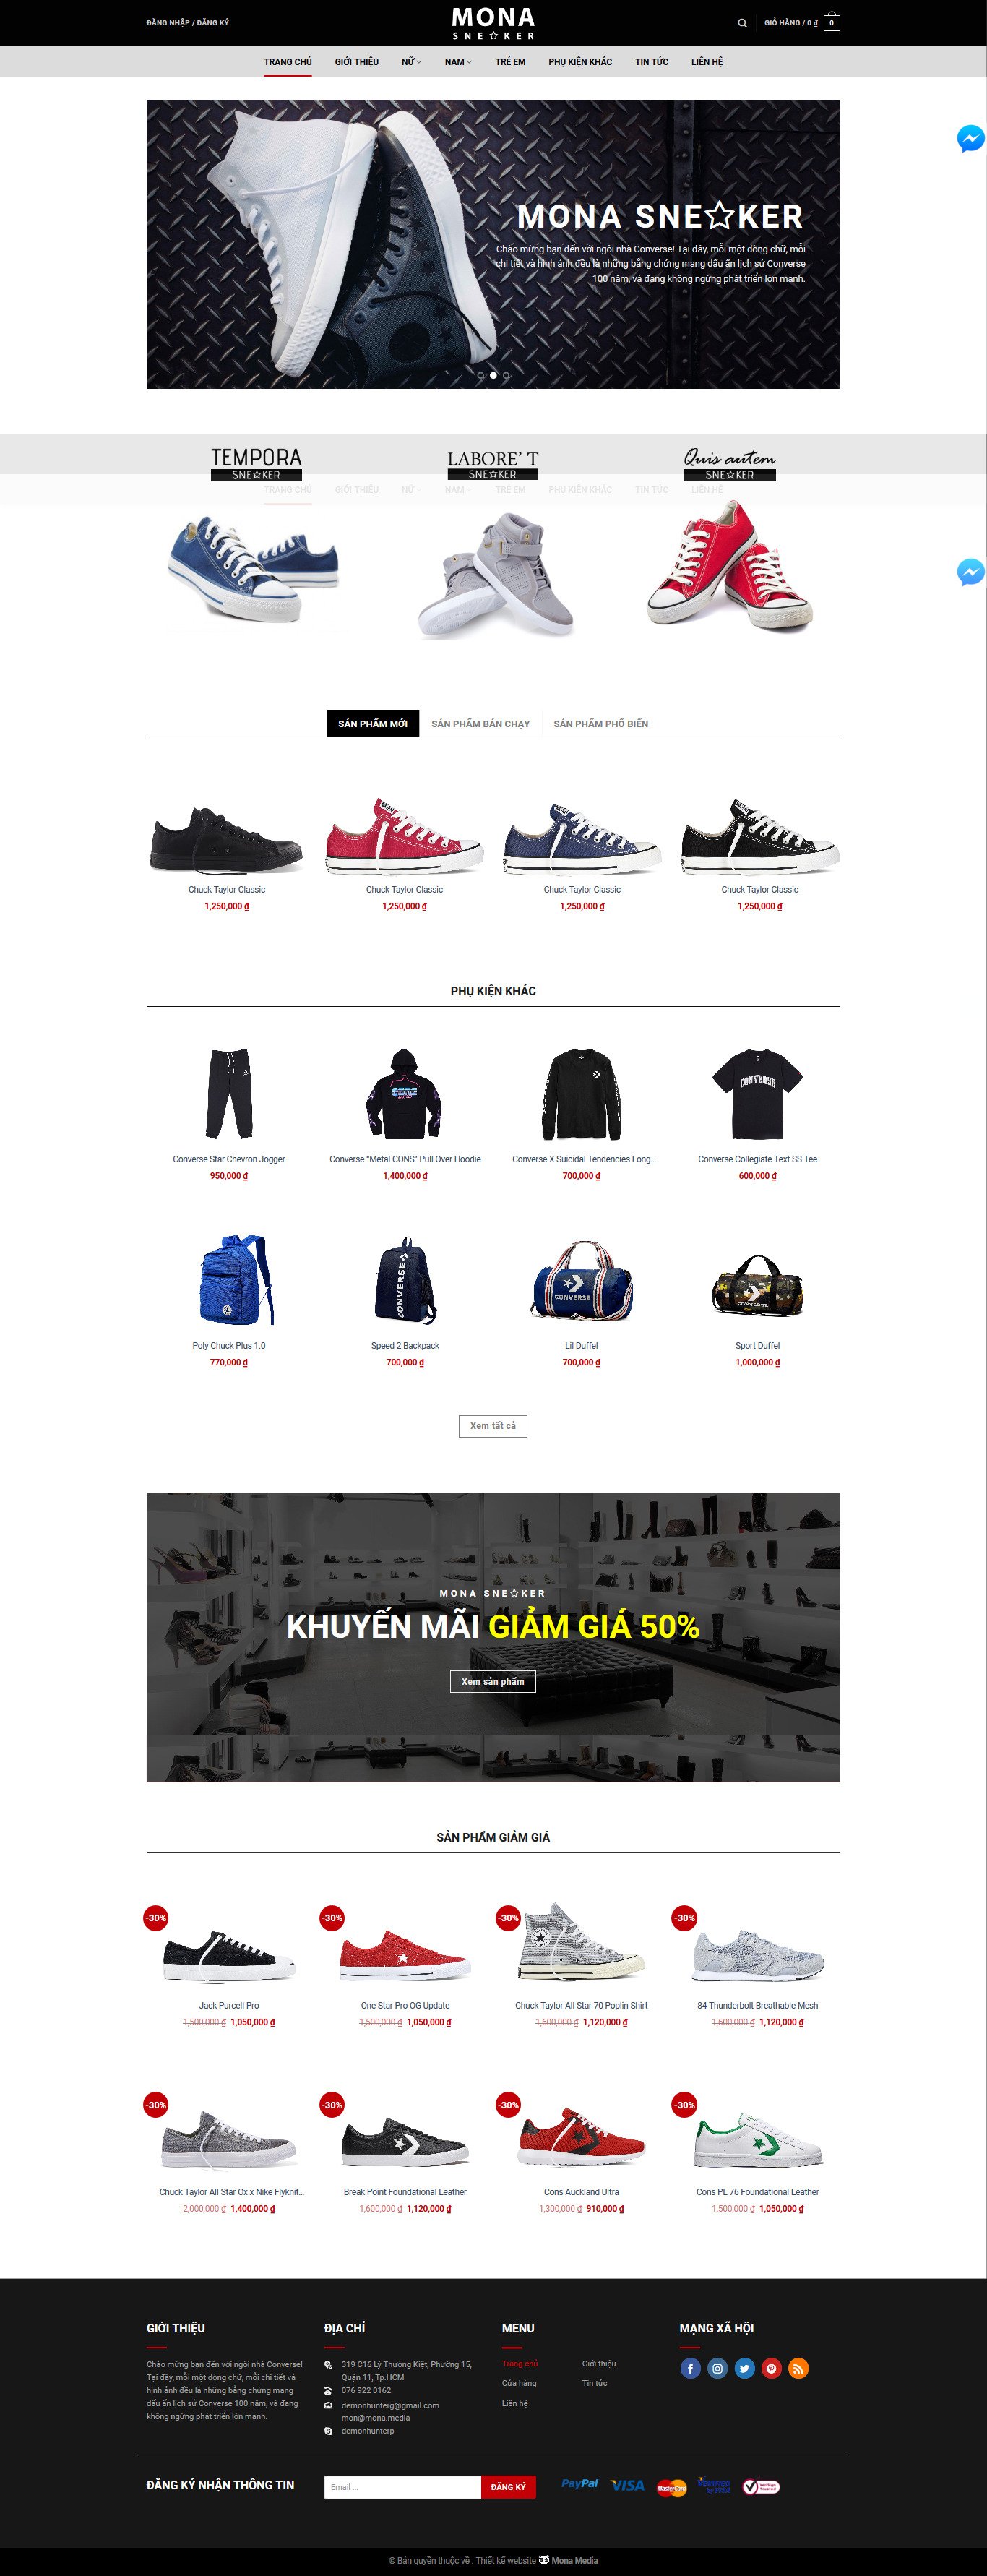 Mẫu website bán giày giao diện 